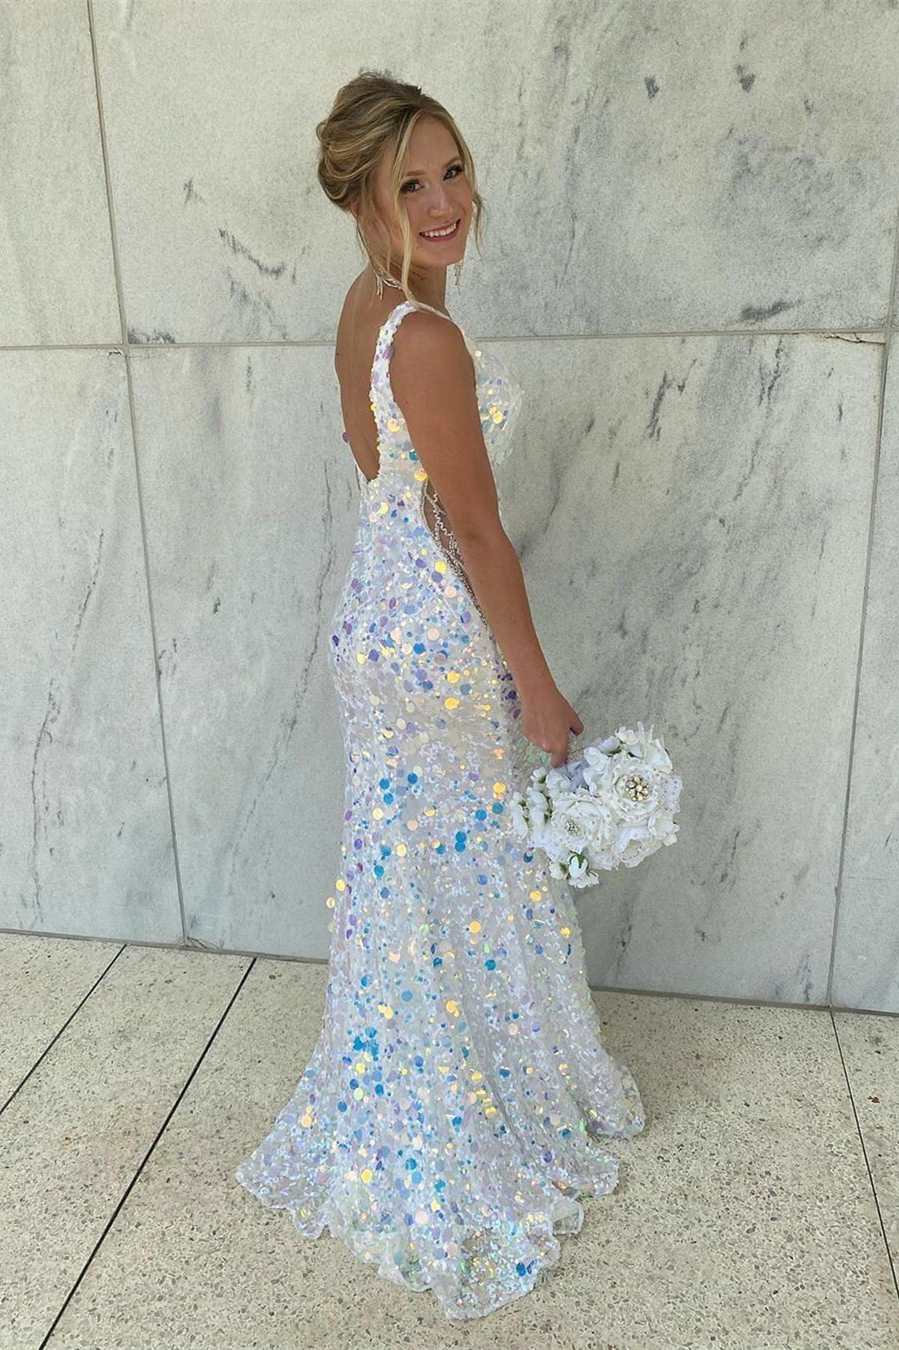 white sparkly prom dress